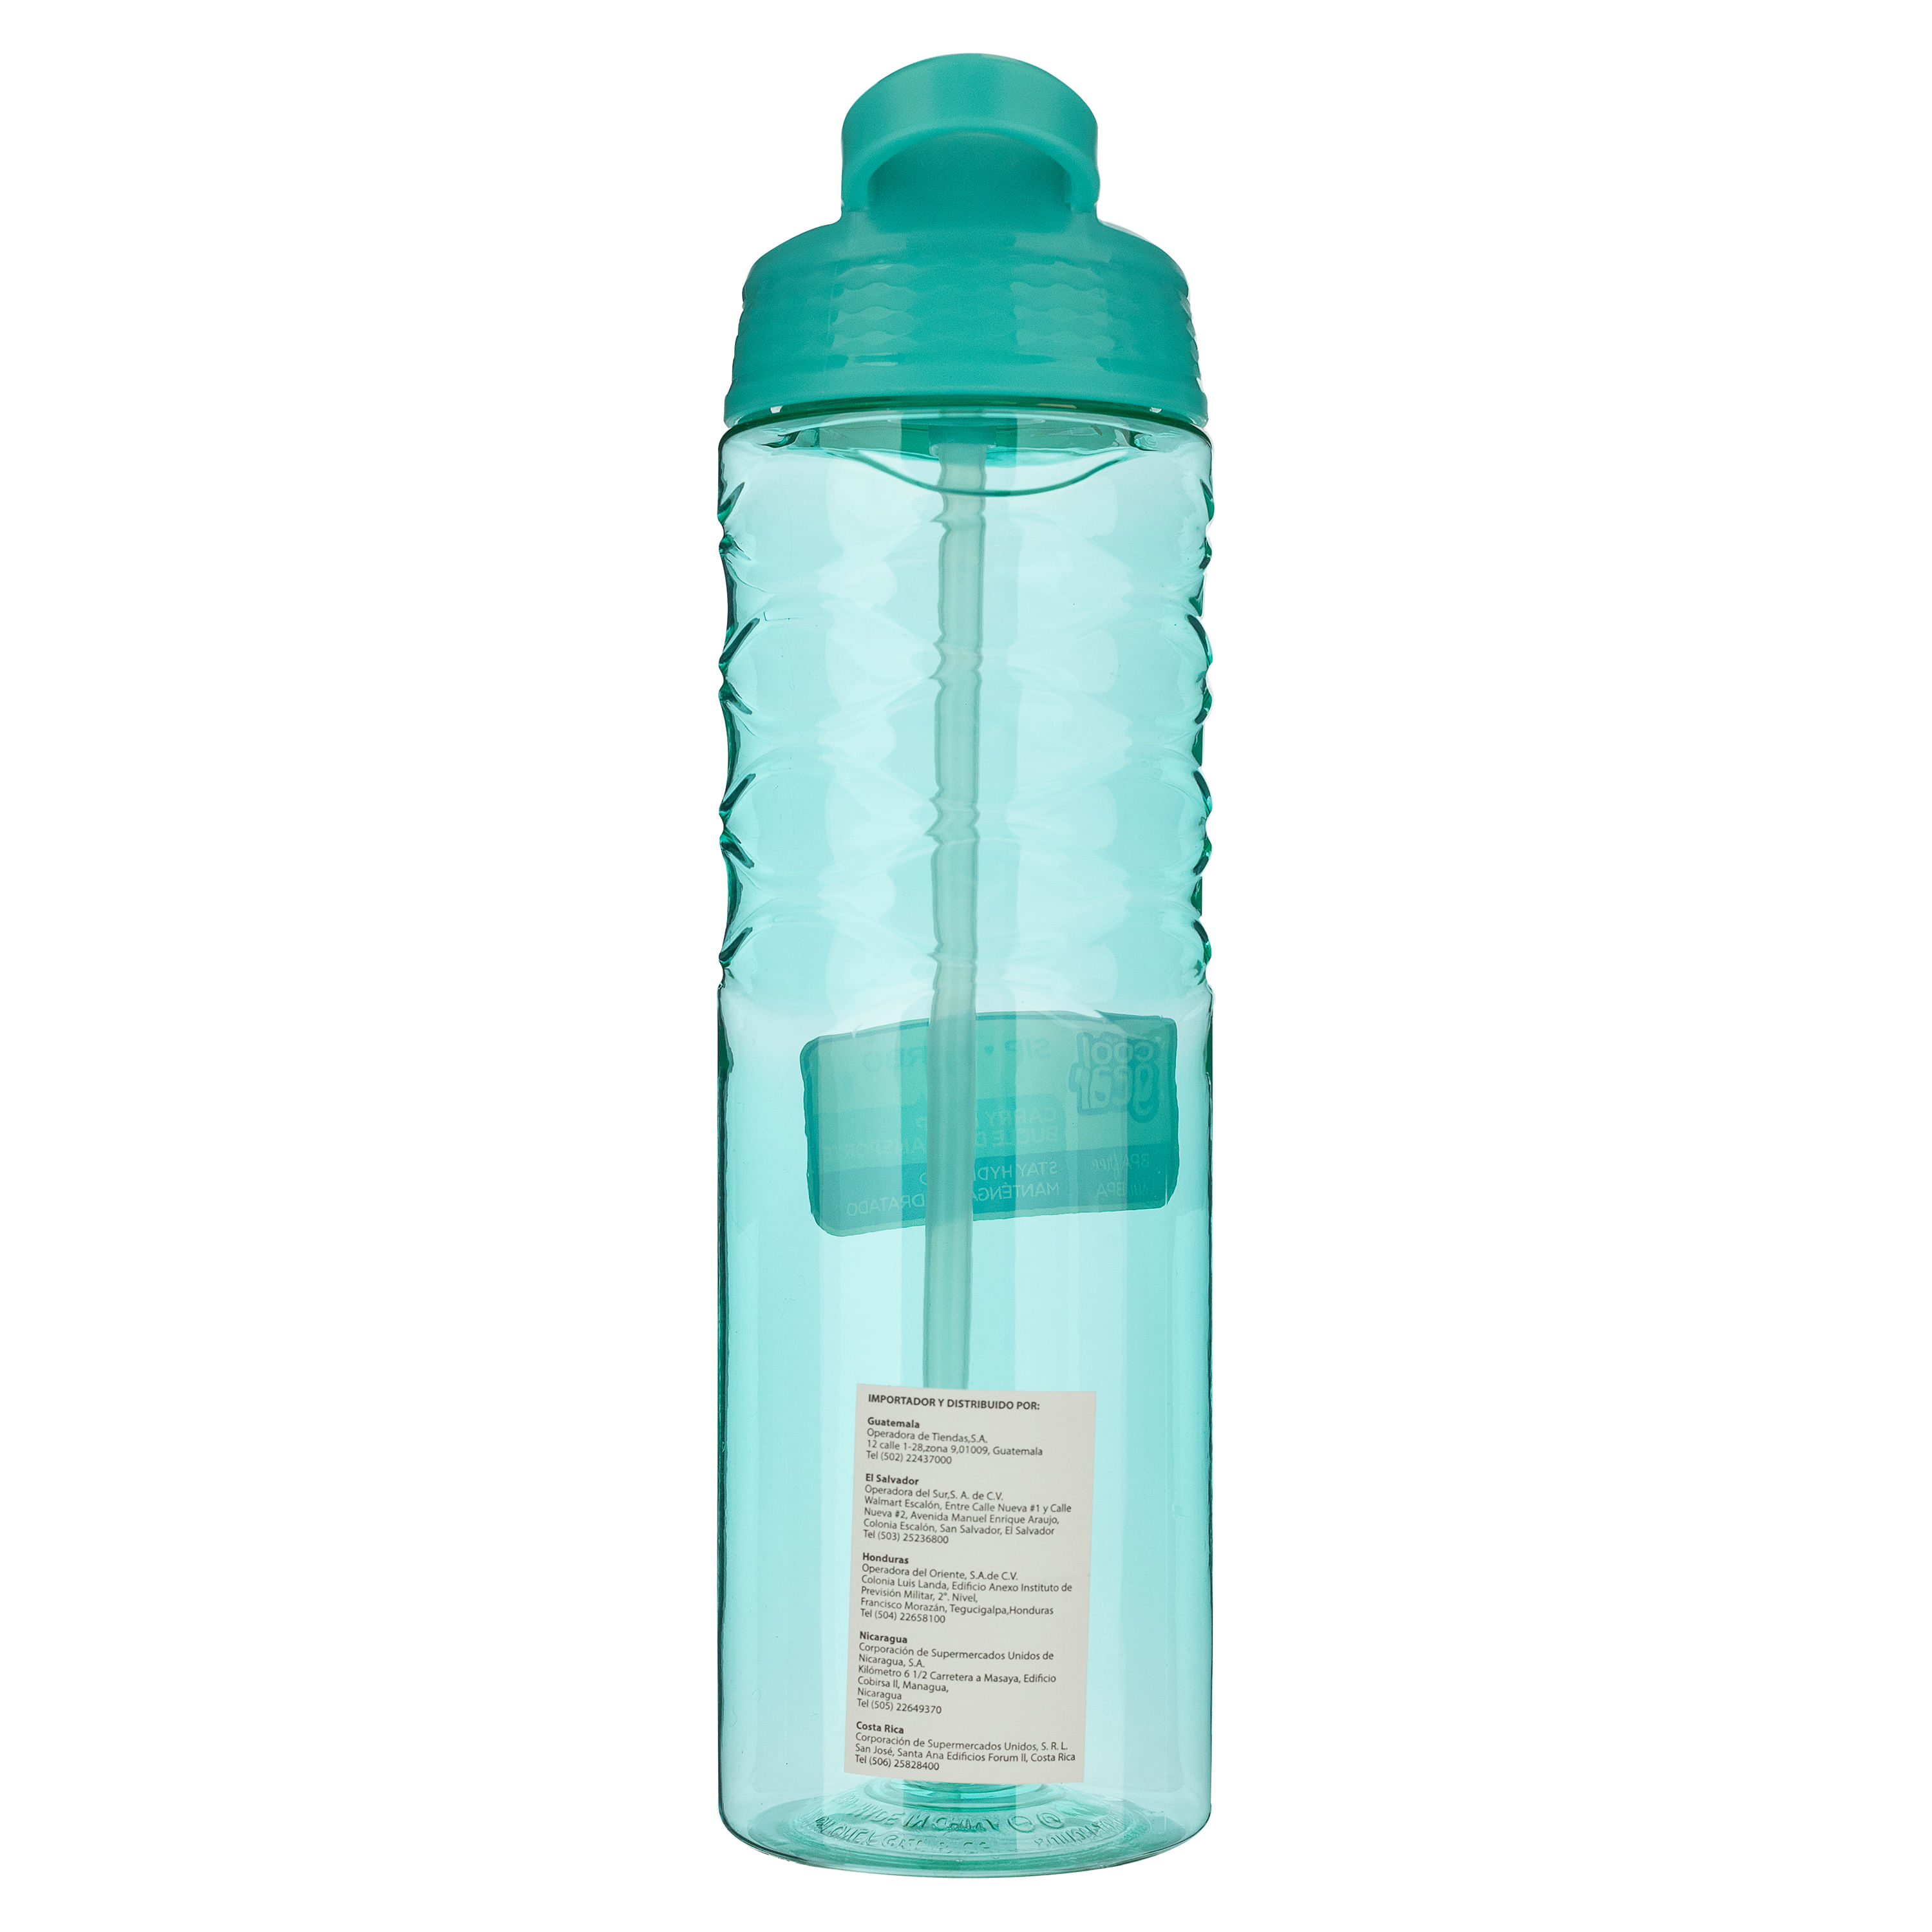 Botella plastica para agua por mayor 02 2595 0896